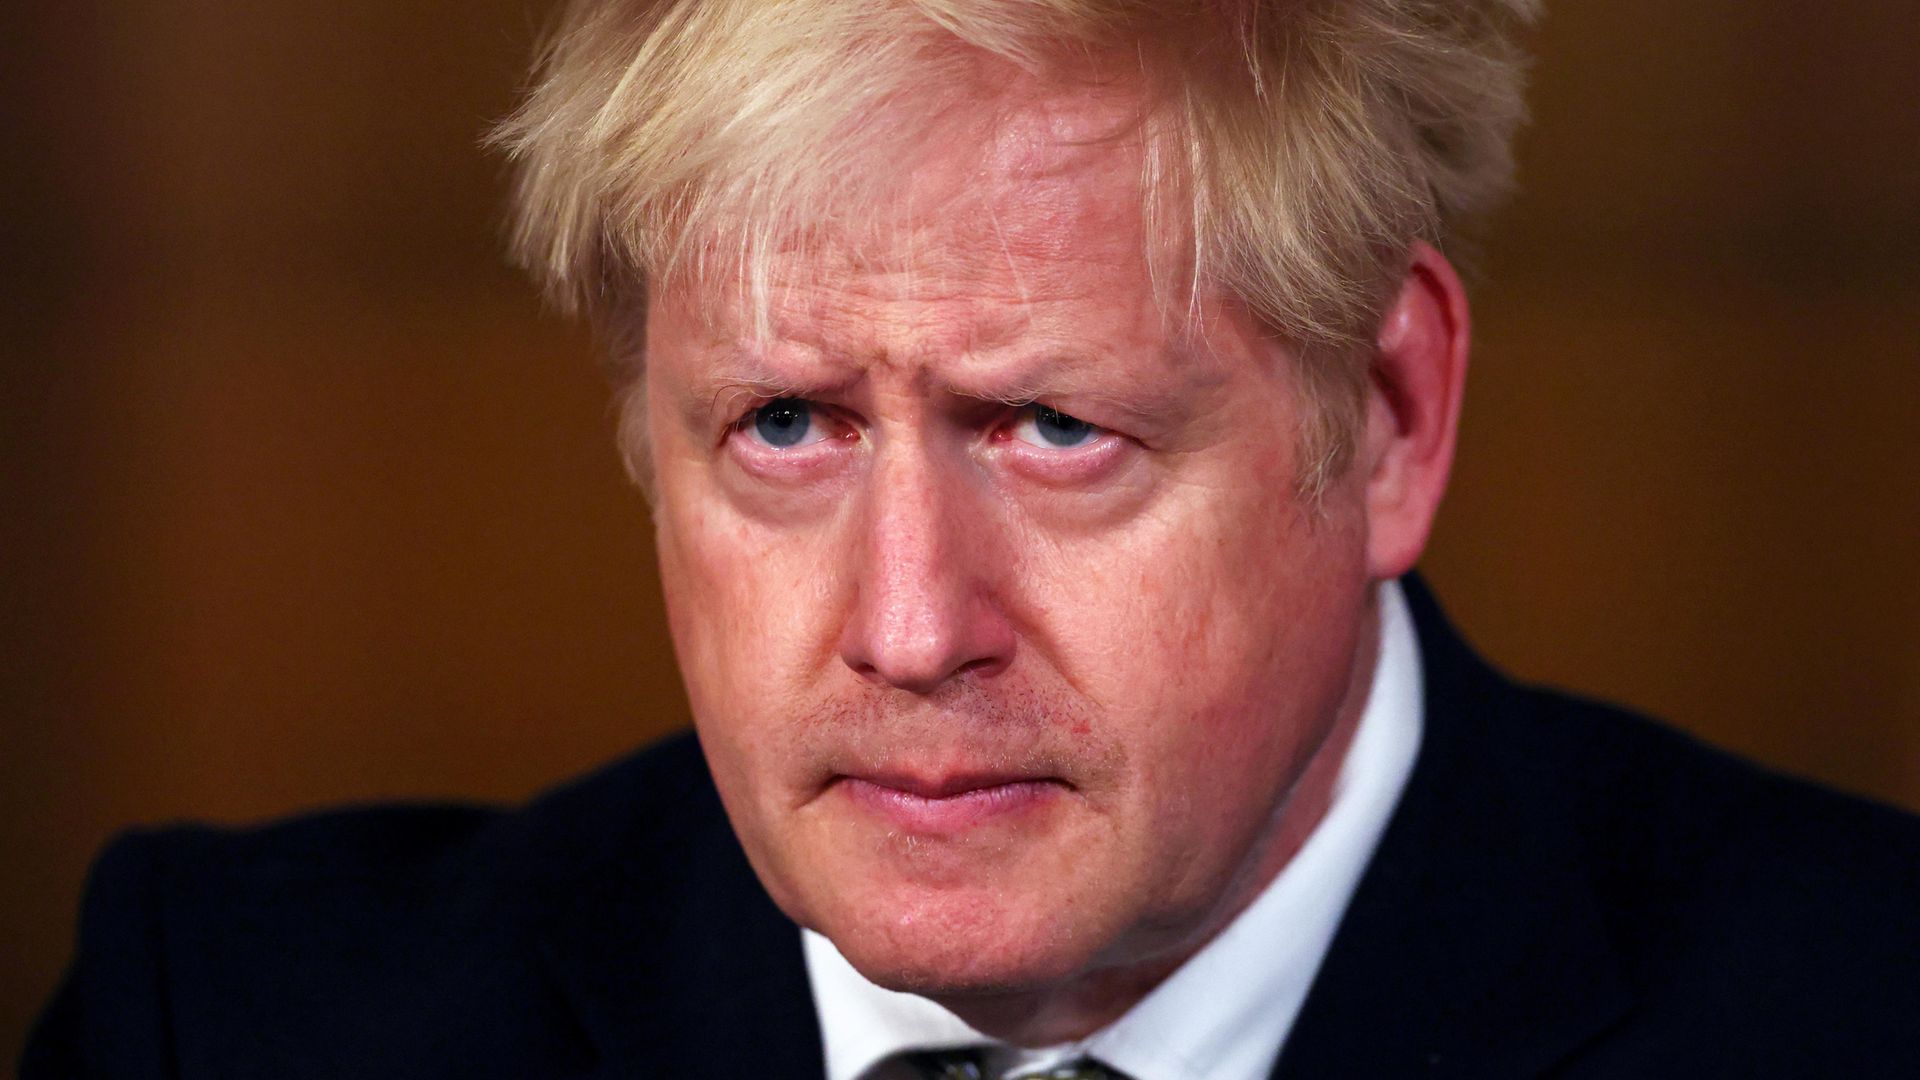 Prime minister Boris Johnson during a media briefing in Downing Street, London, on coronavirus (COVID-19)